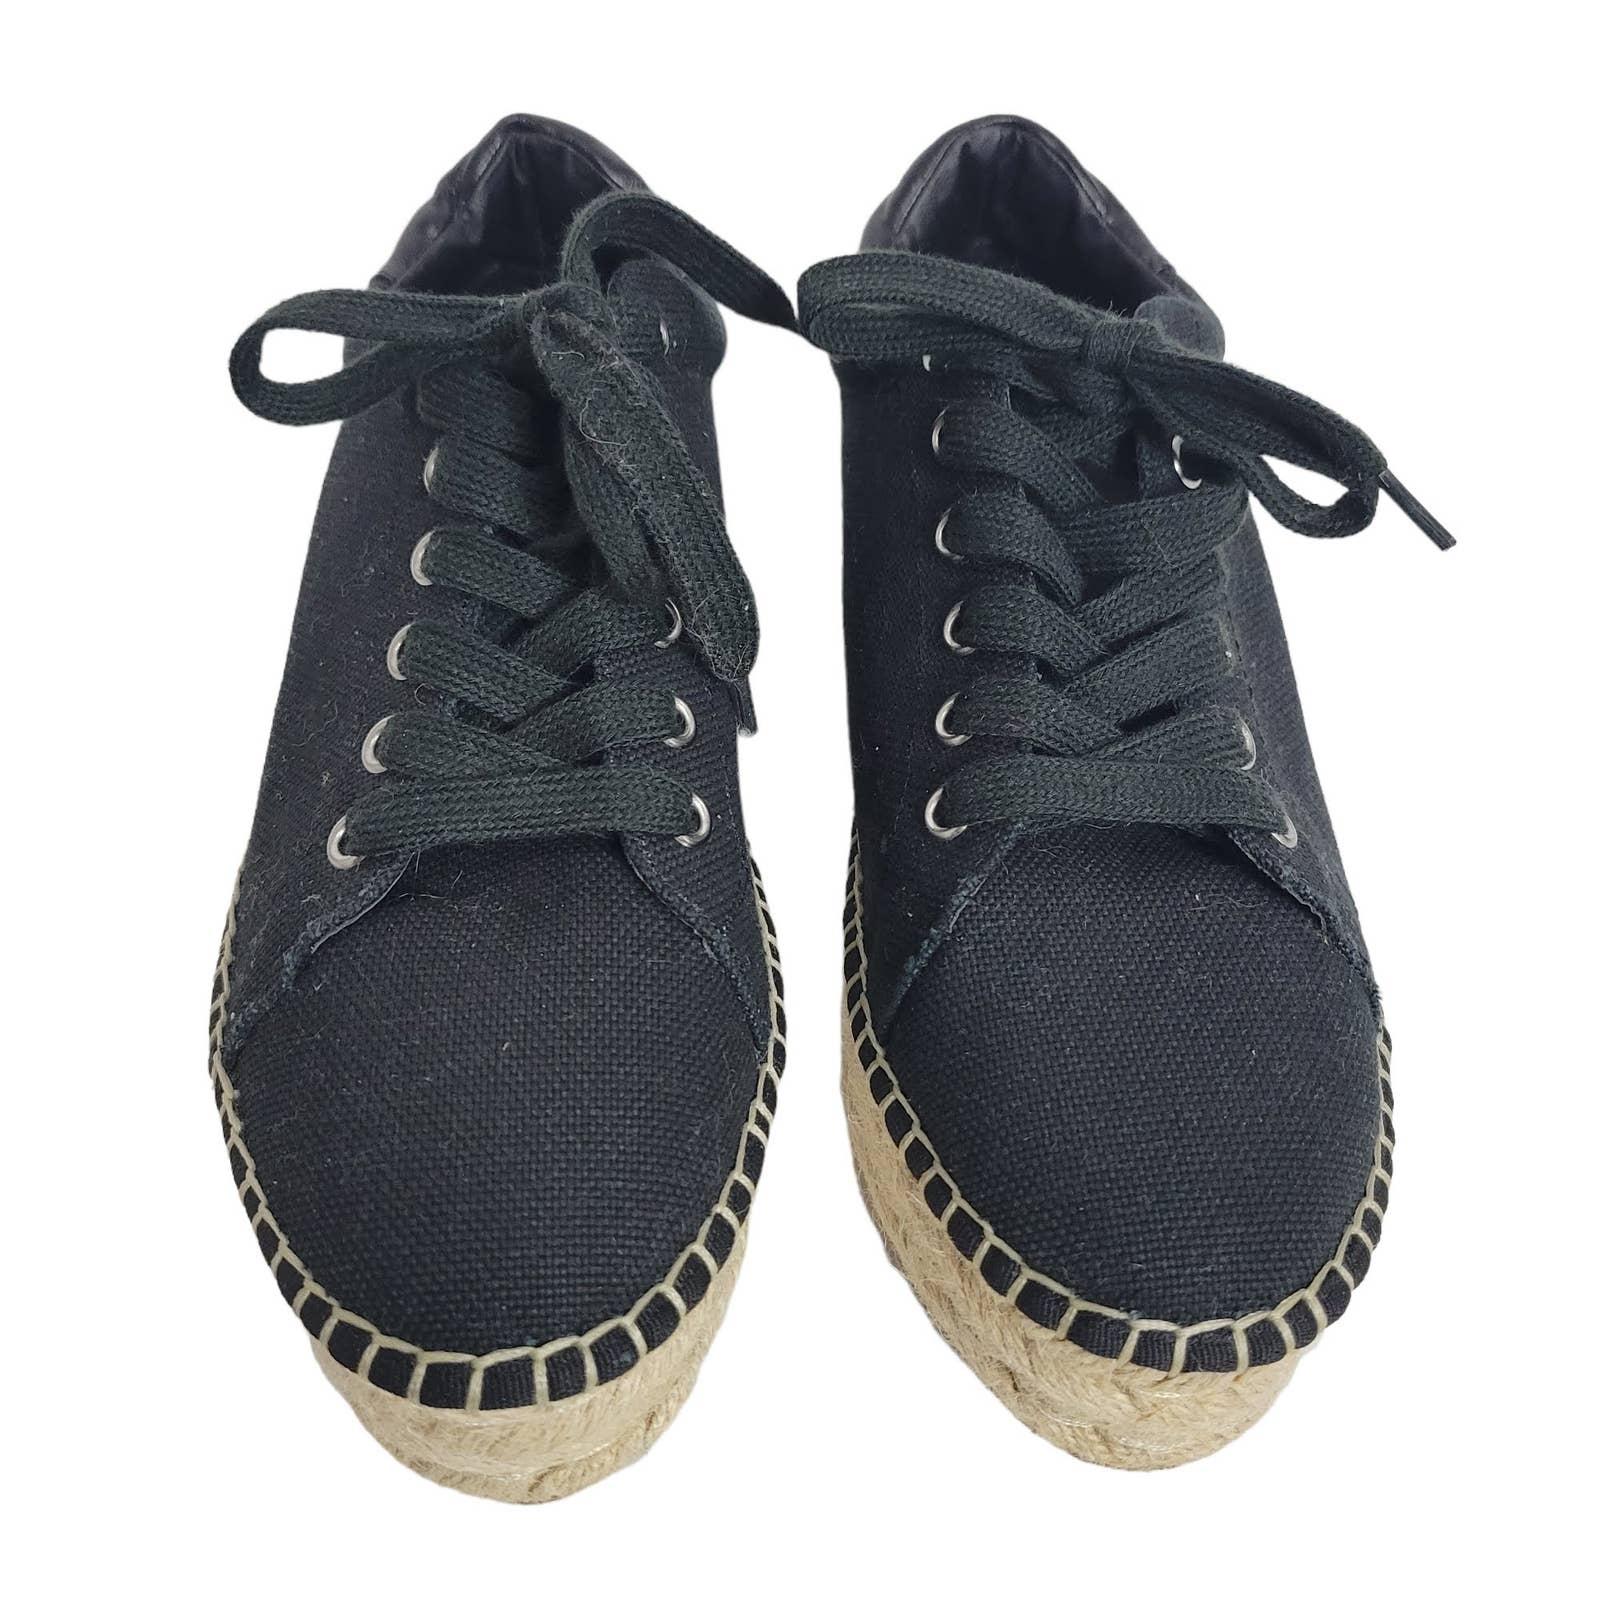 Steve Madden Attitude Espadrille Flatform Shoes Black Canvas Sneakers Size 8.5